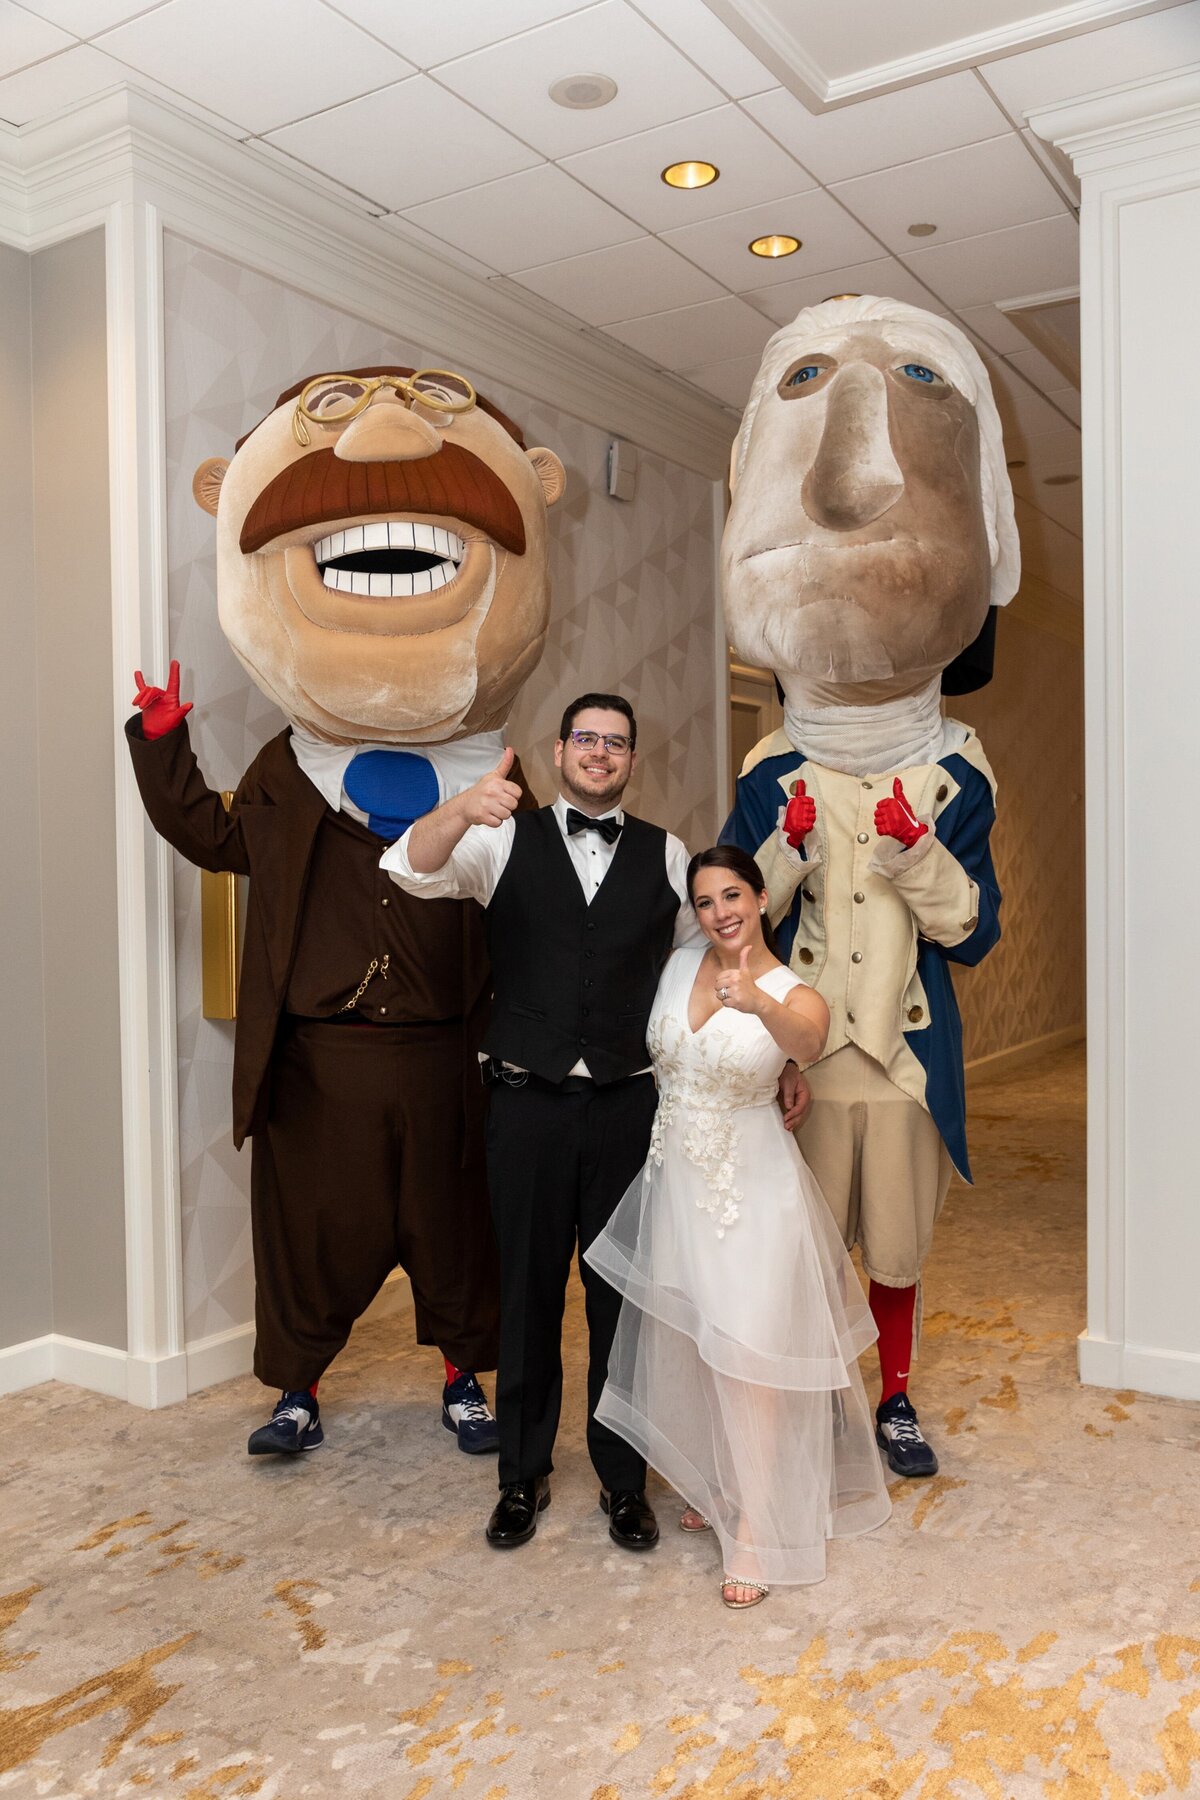 Event-Planning-DC-Wedding-Fairmont-Hotel-Michael-Kress-Photo-Nats-mascots